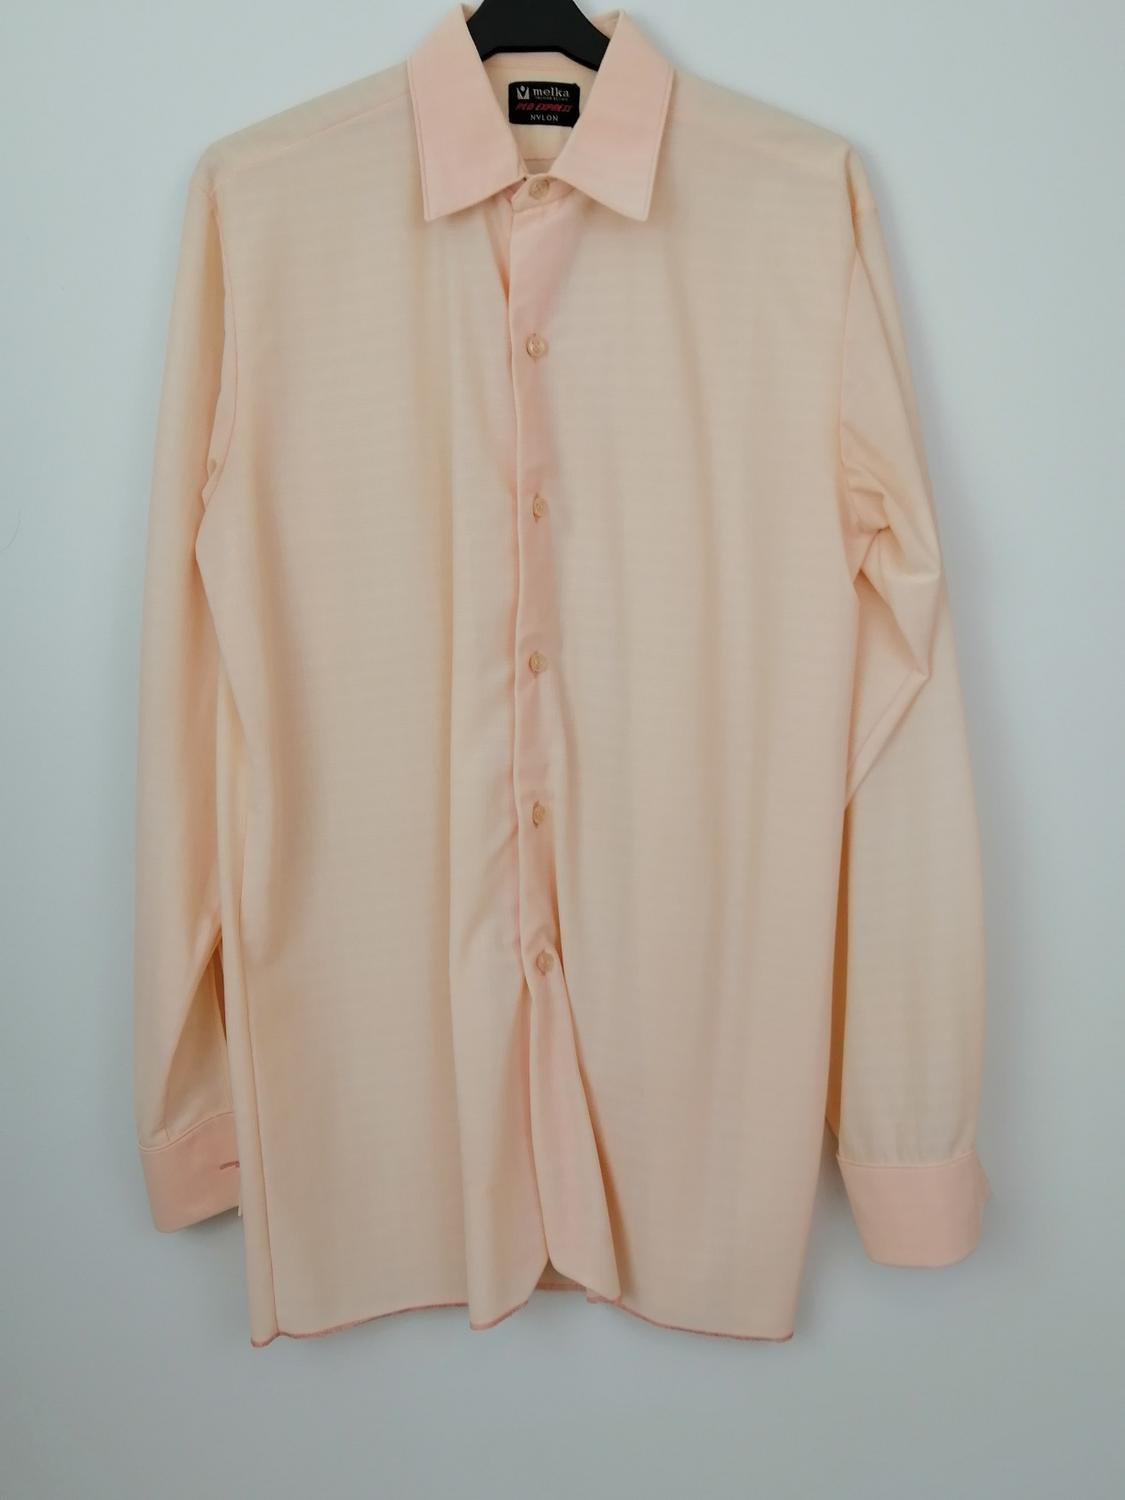 Vintage ljusrosa nylonskjorta Melka rosa-aprikos 5060-tal